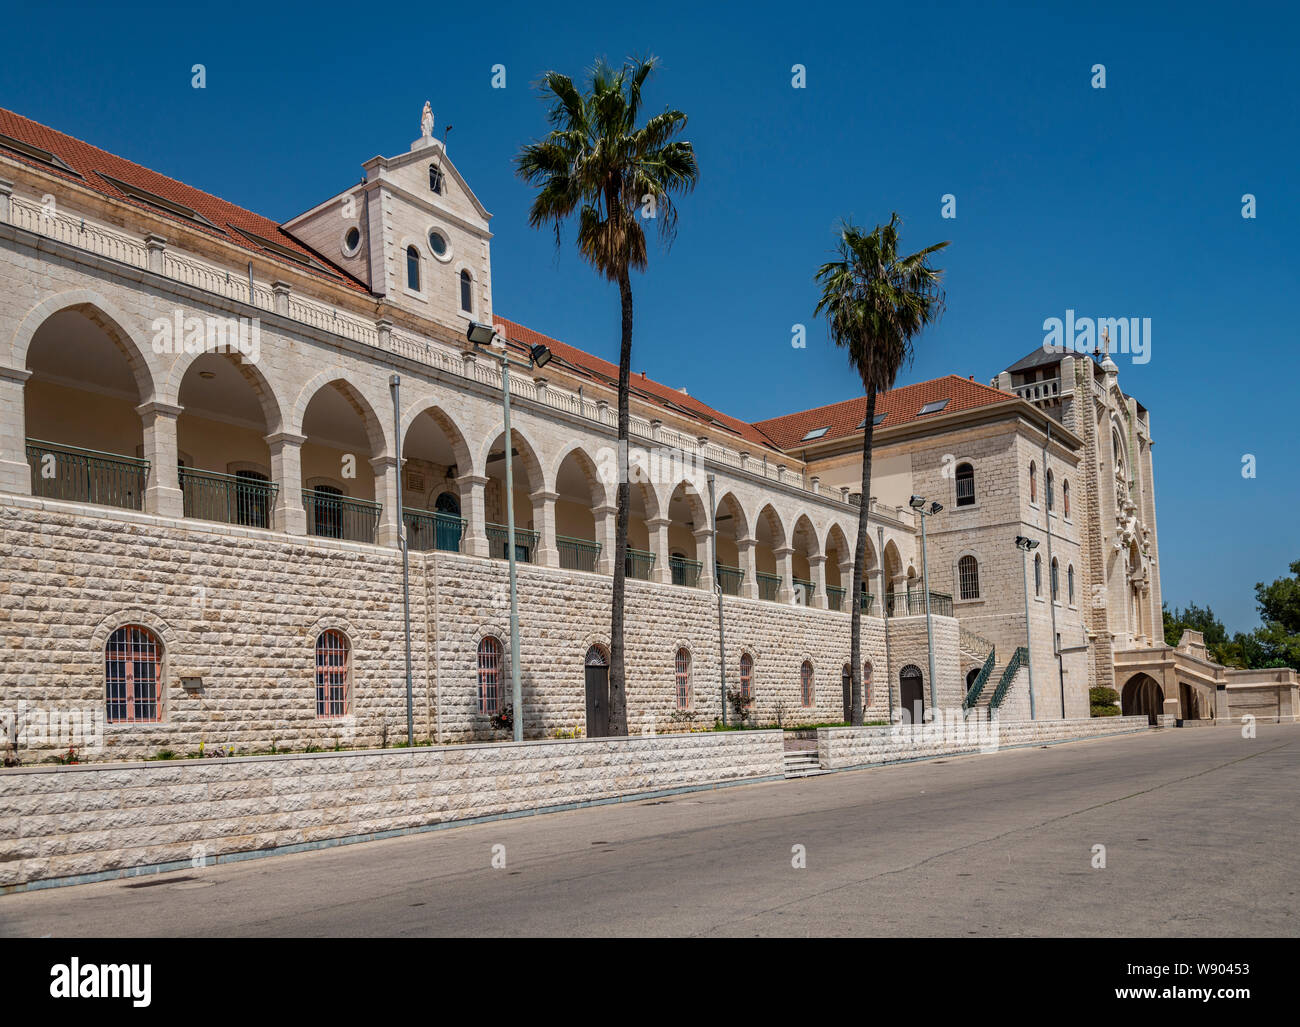 The Don Bosco vocational high school near Basilica of Jesus the Adolescent in Nazareth, Israel Stock Photo